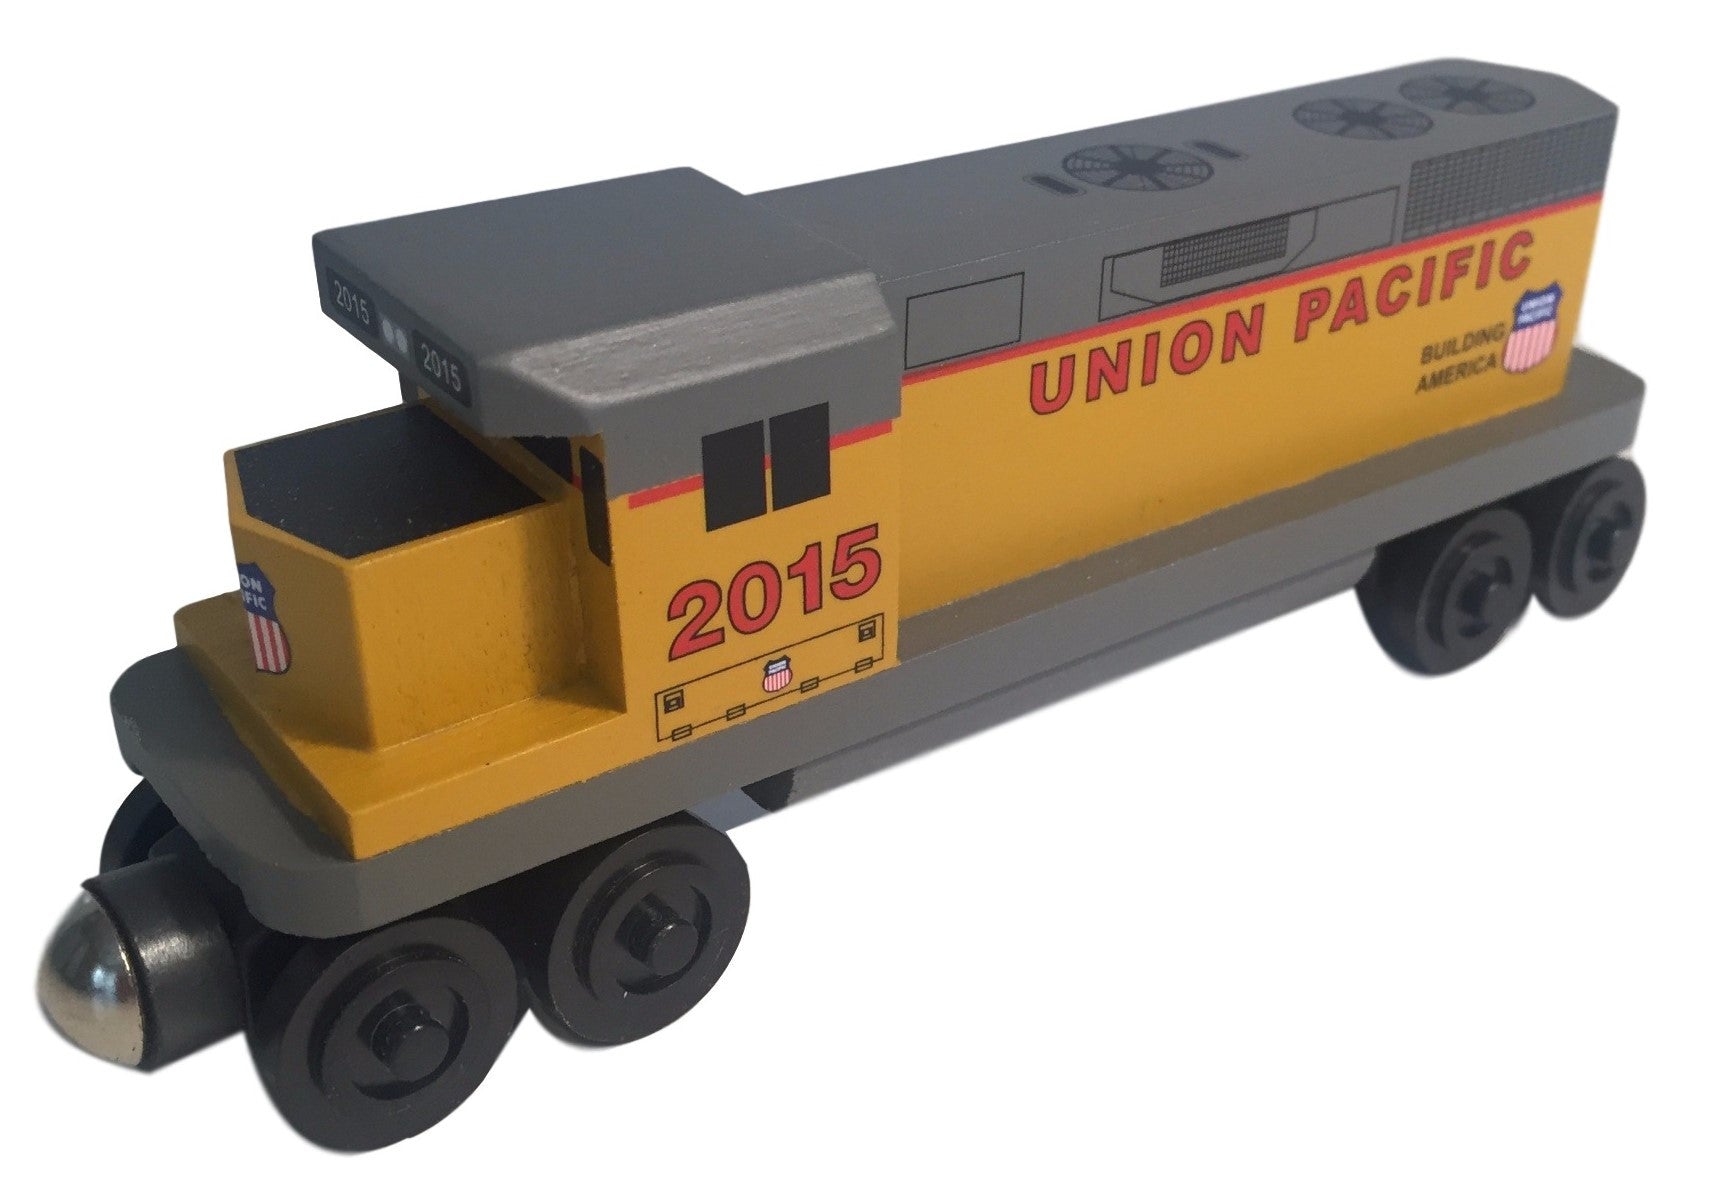 Whittle Shortline Railroad Union Pacific GP-38 Diesel Engine Wooden Toy Train